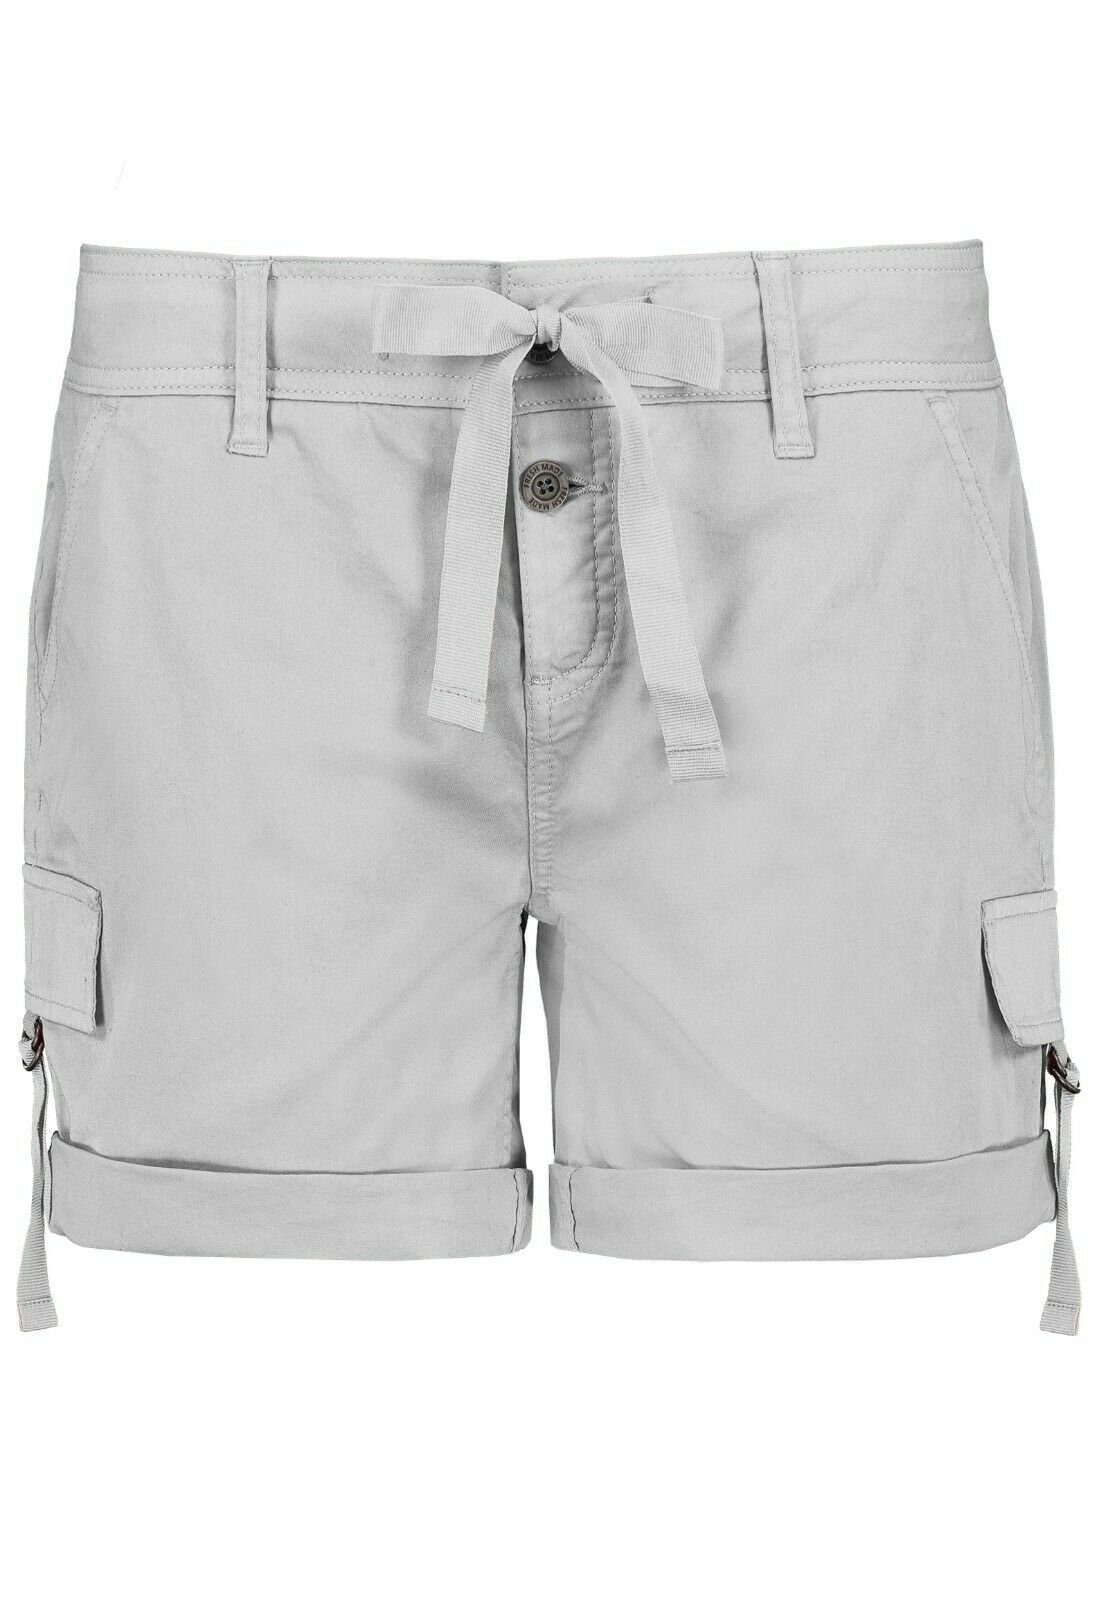 Fresh Made Bermudas Grau Hotpants Hose Shorts Sommer Kurze Bermuda Short